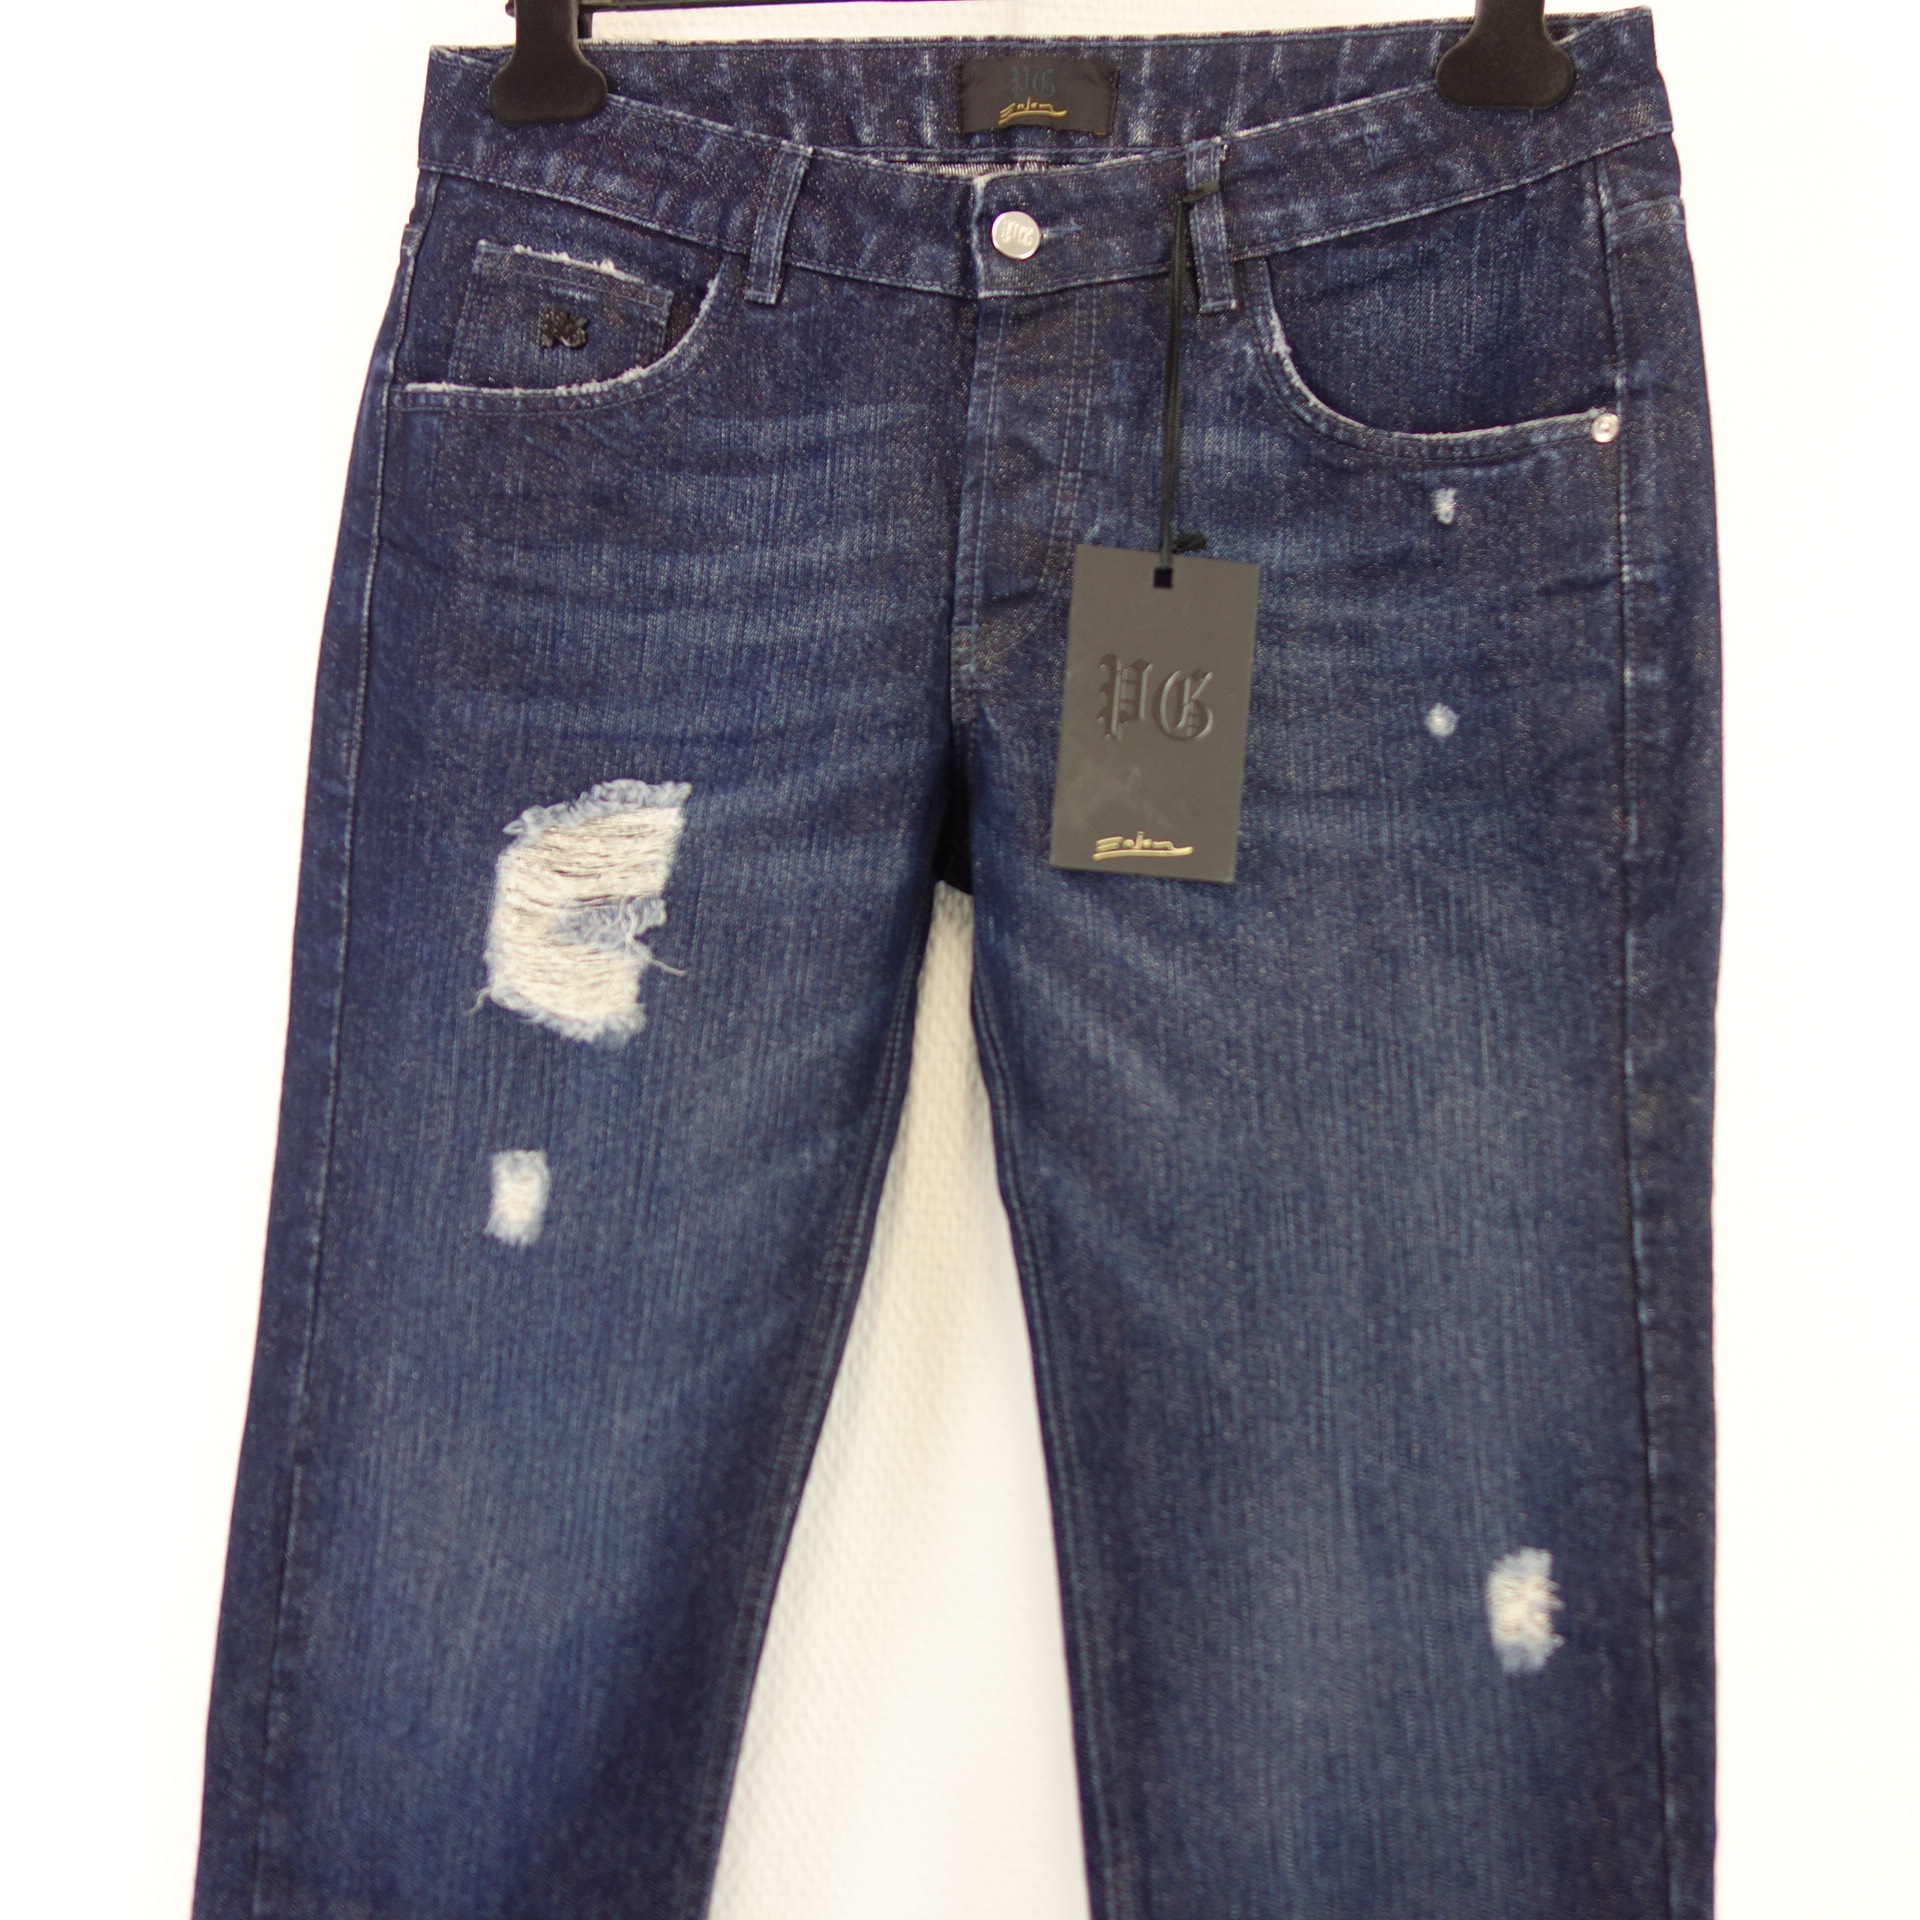 PG ENJOY Jeans Hose Blau Modell REVE Distressed Look Straight Glitzer